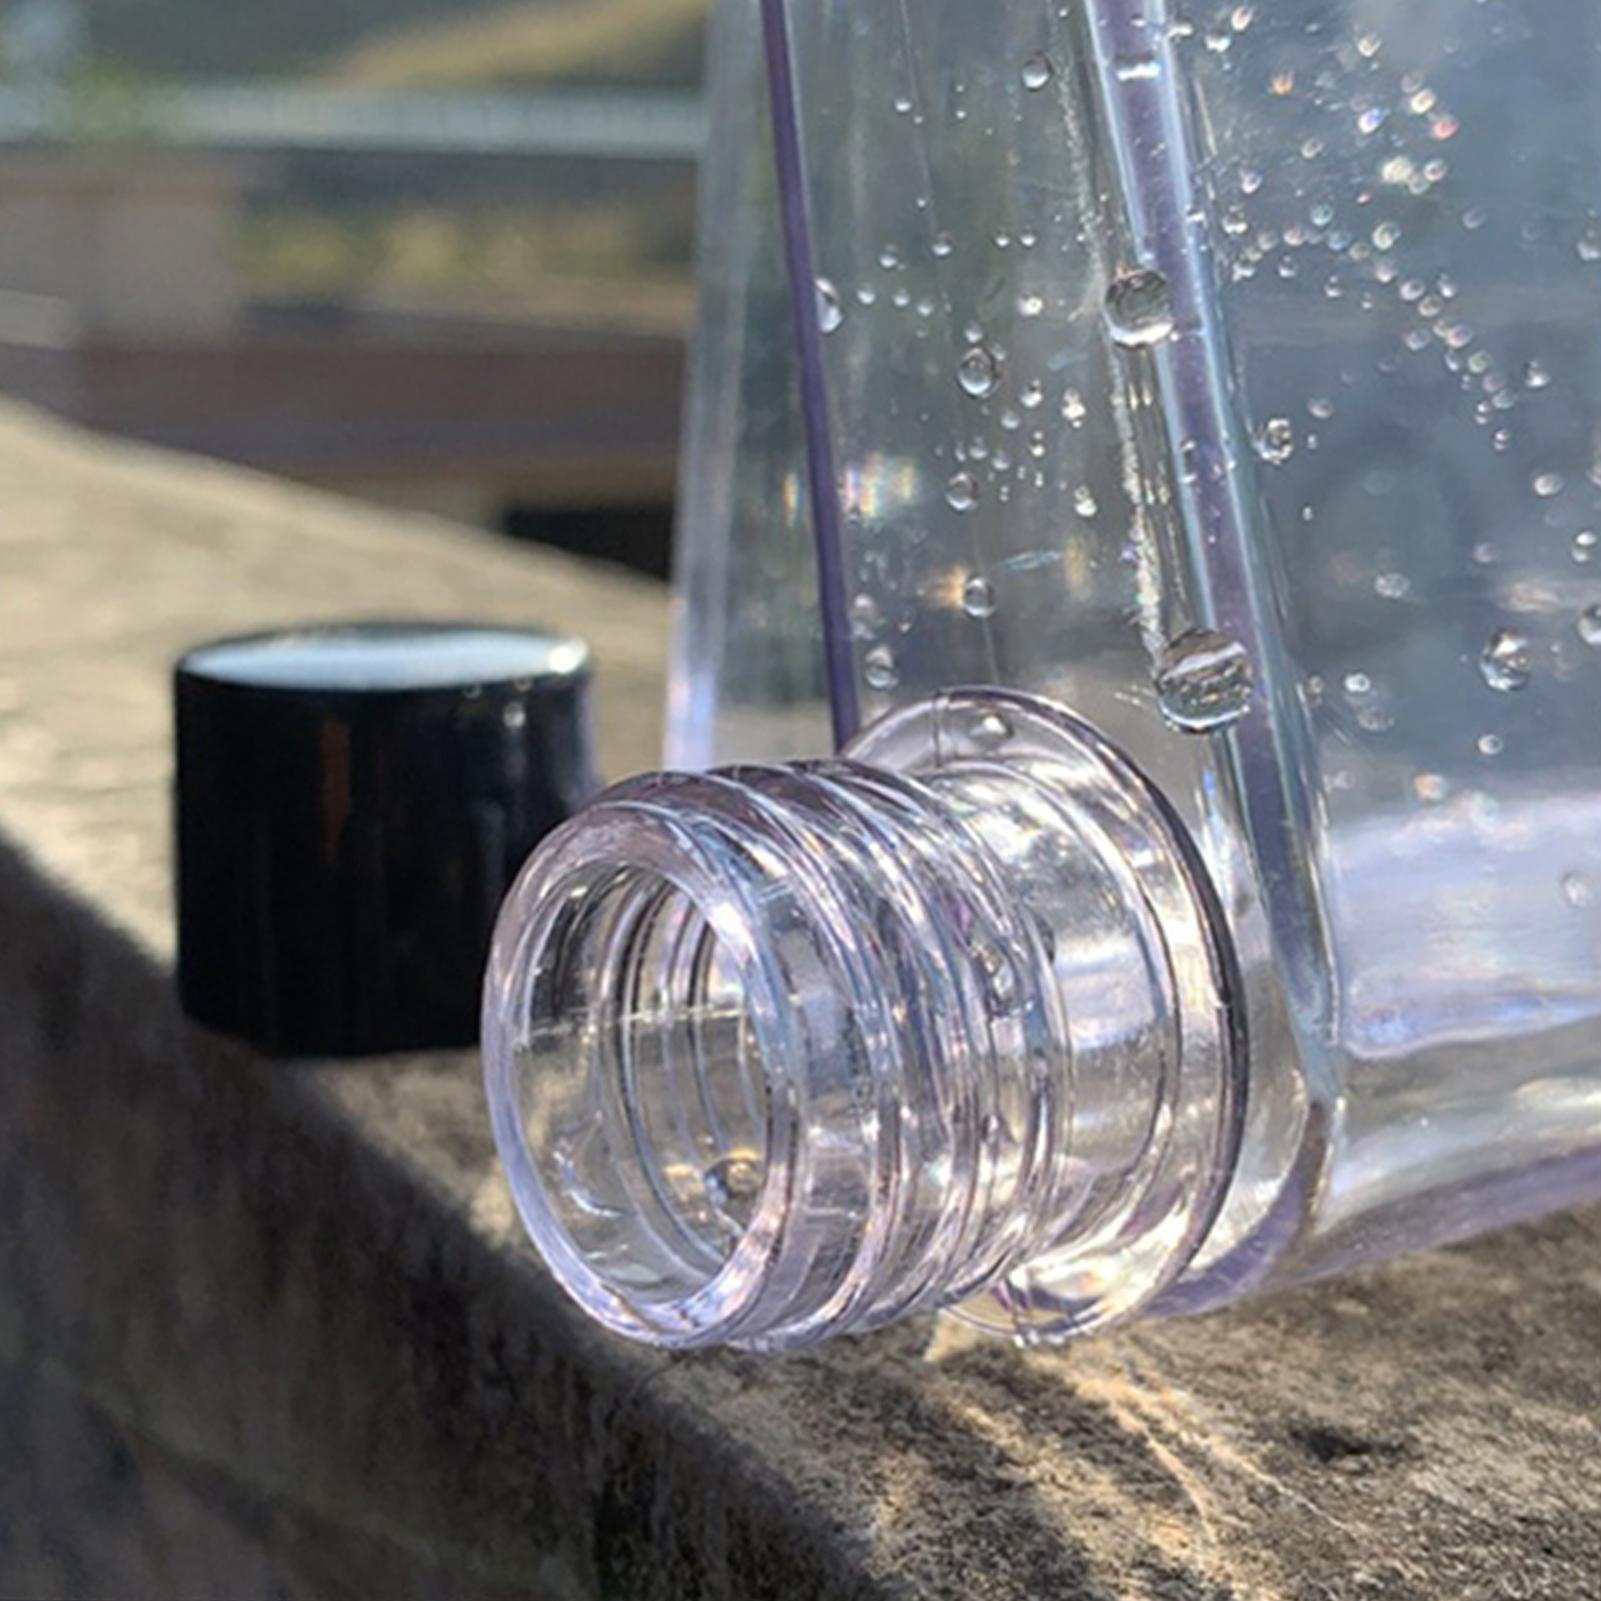 CHICIRIS Flat Water Bottle, 380ml Portable A5 Water Bottle Leak Proof Clear  Thin Water Bottle Flask …See more CHICIRIS Flat Water Bottle, 380ml